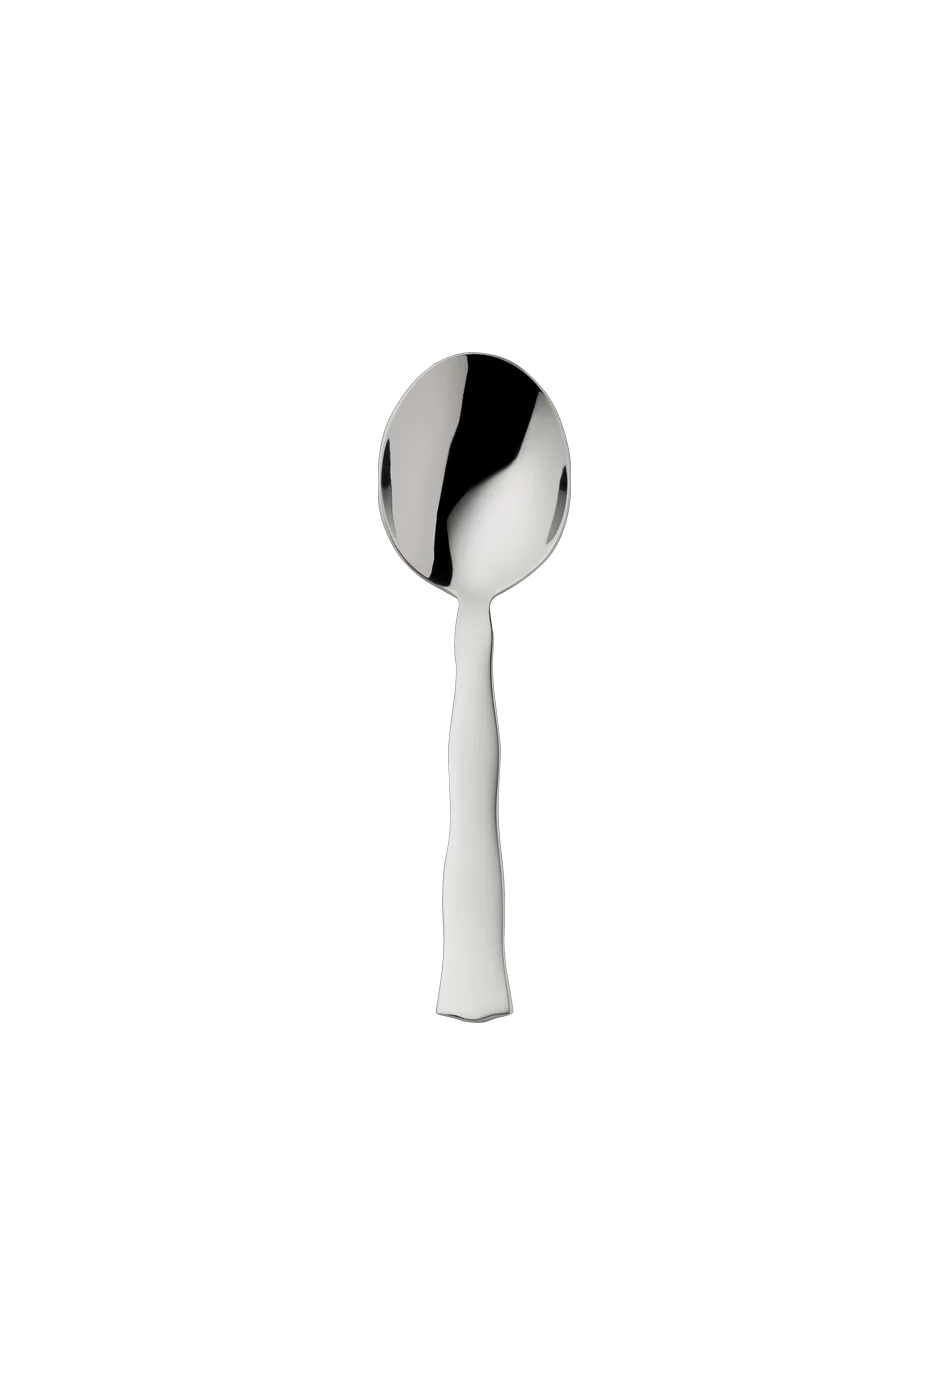 Lago Cream Spoon (Broth Spoon) (18/8 stainless steel)